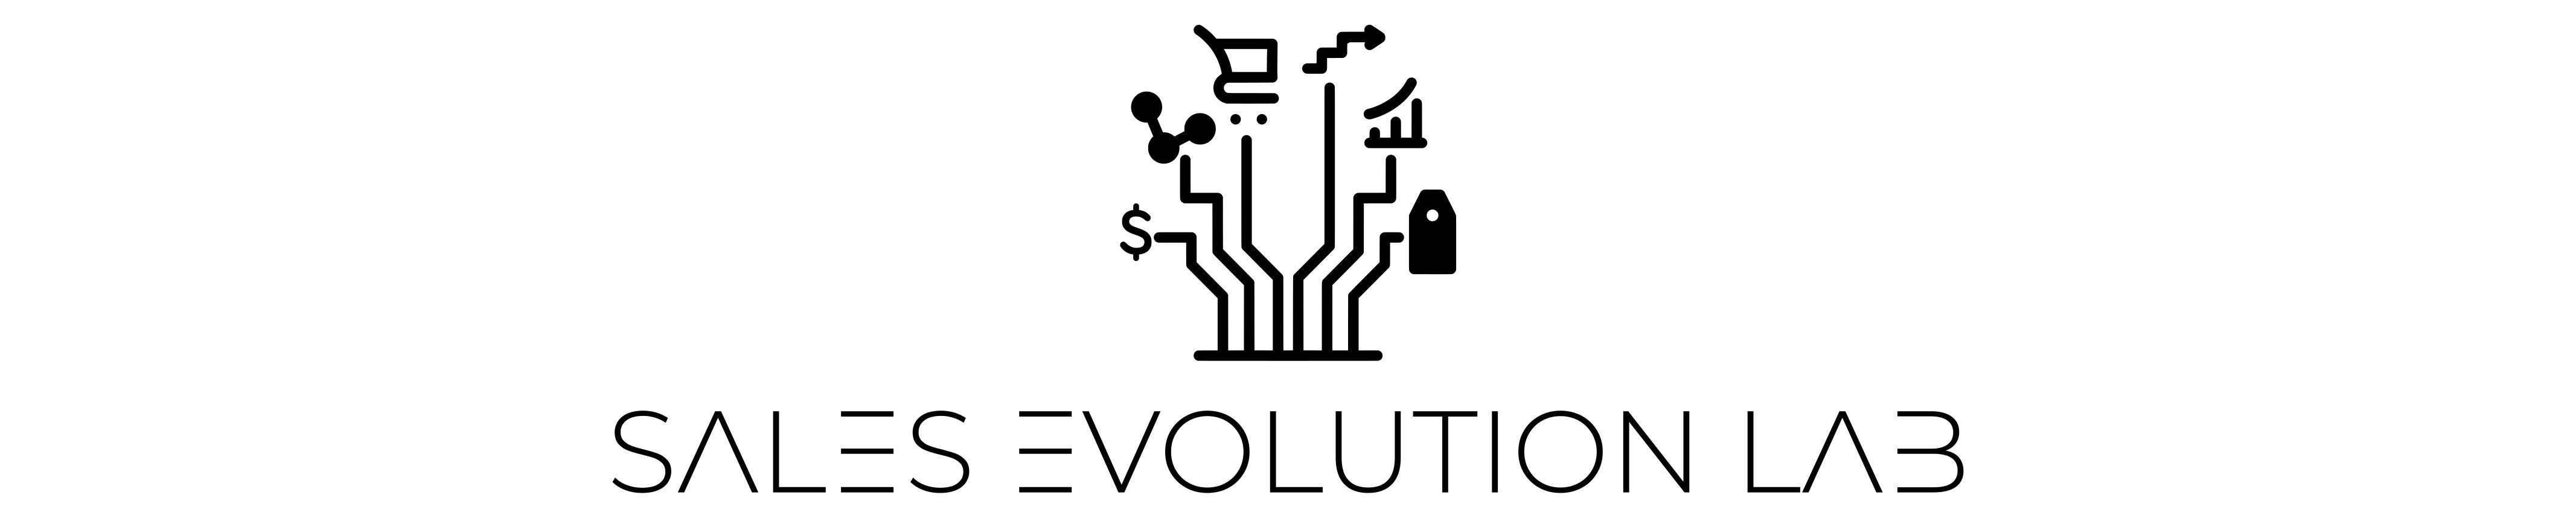 Sales Evolution Lab